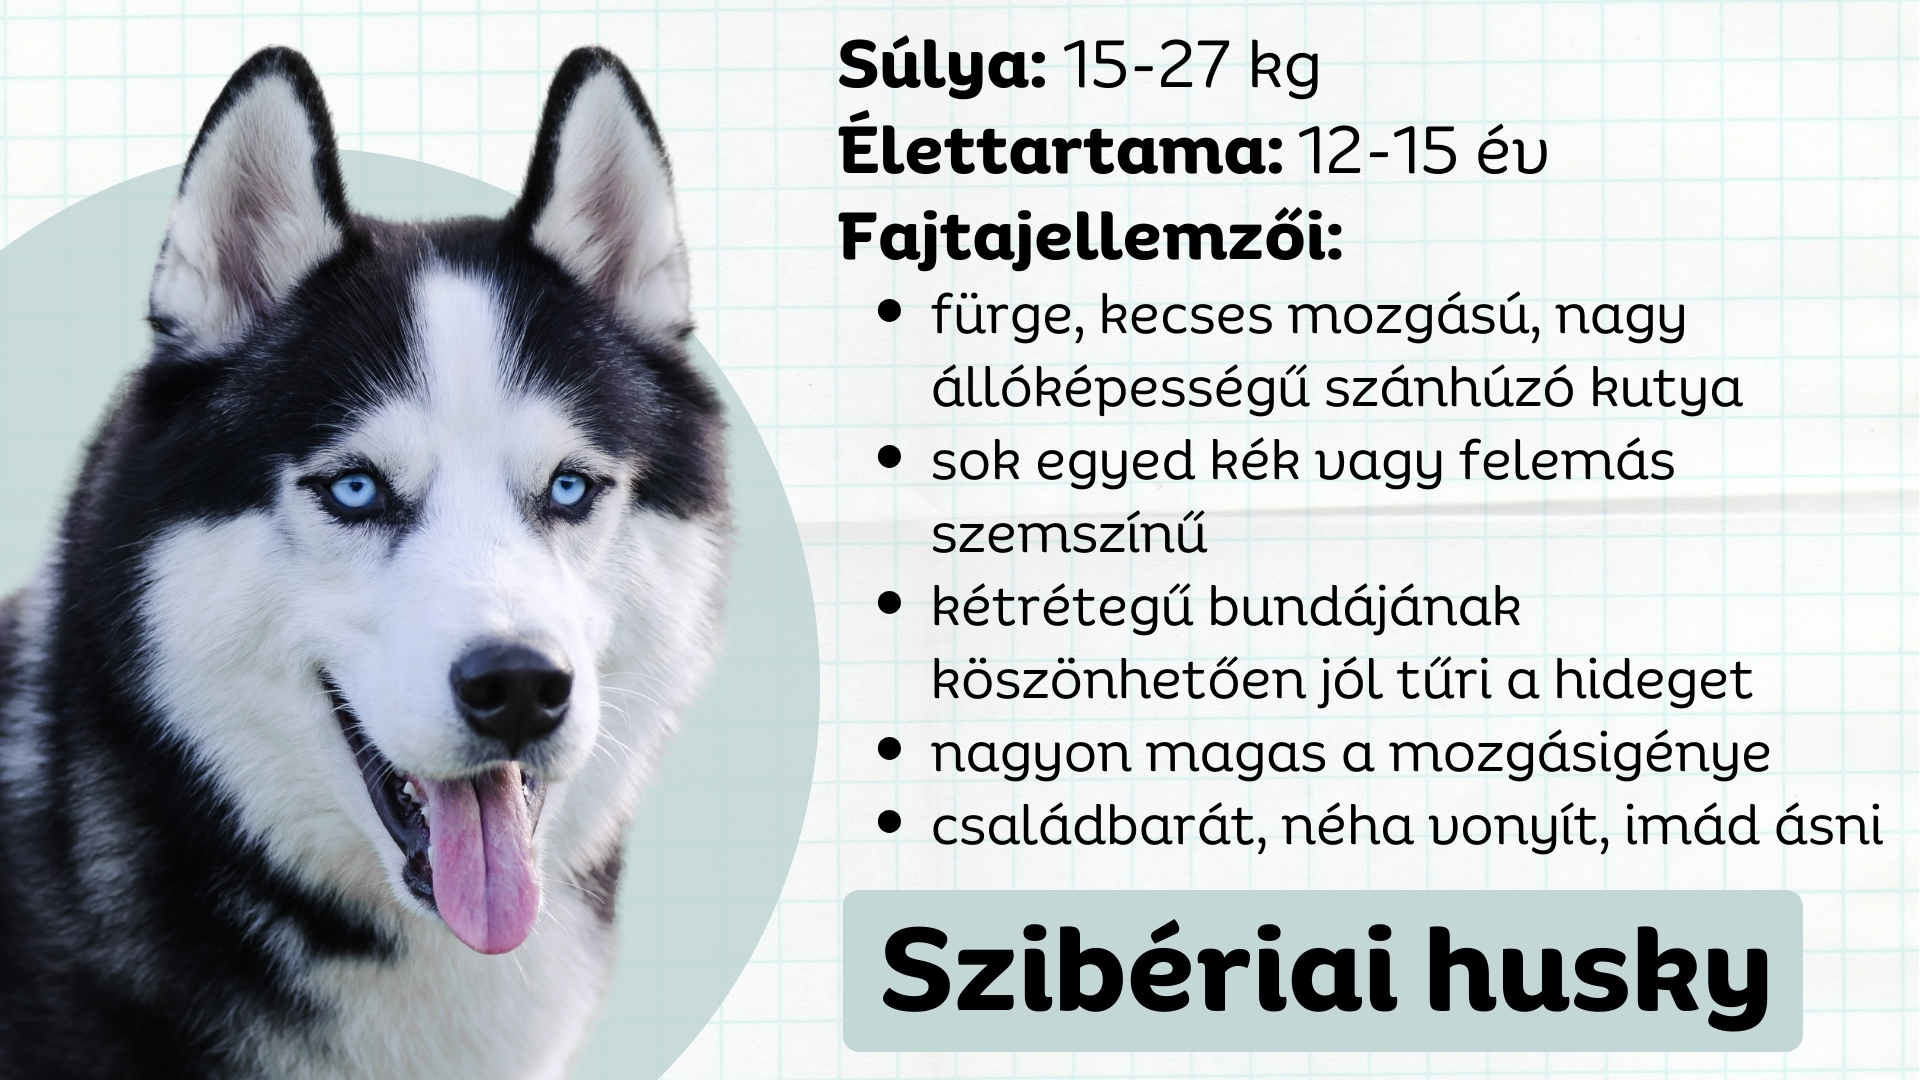 Szibériai husky jellemzői1